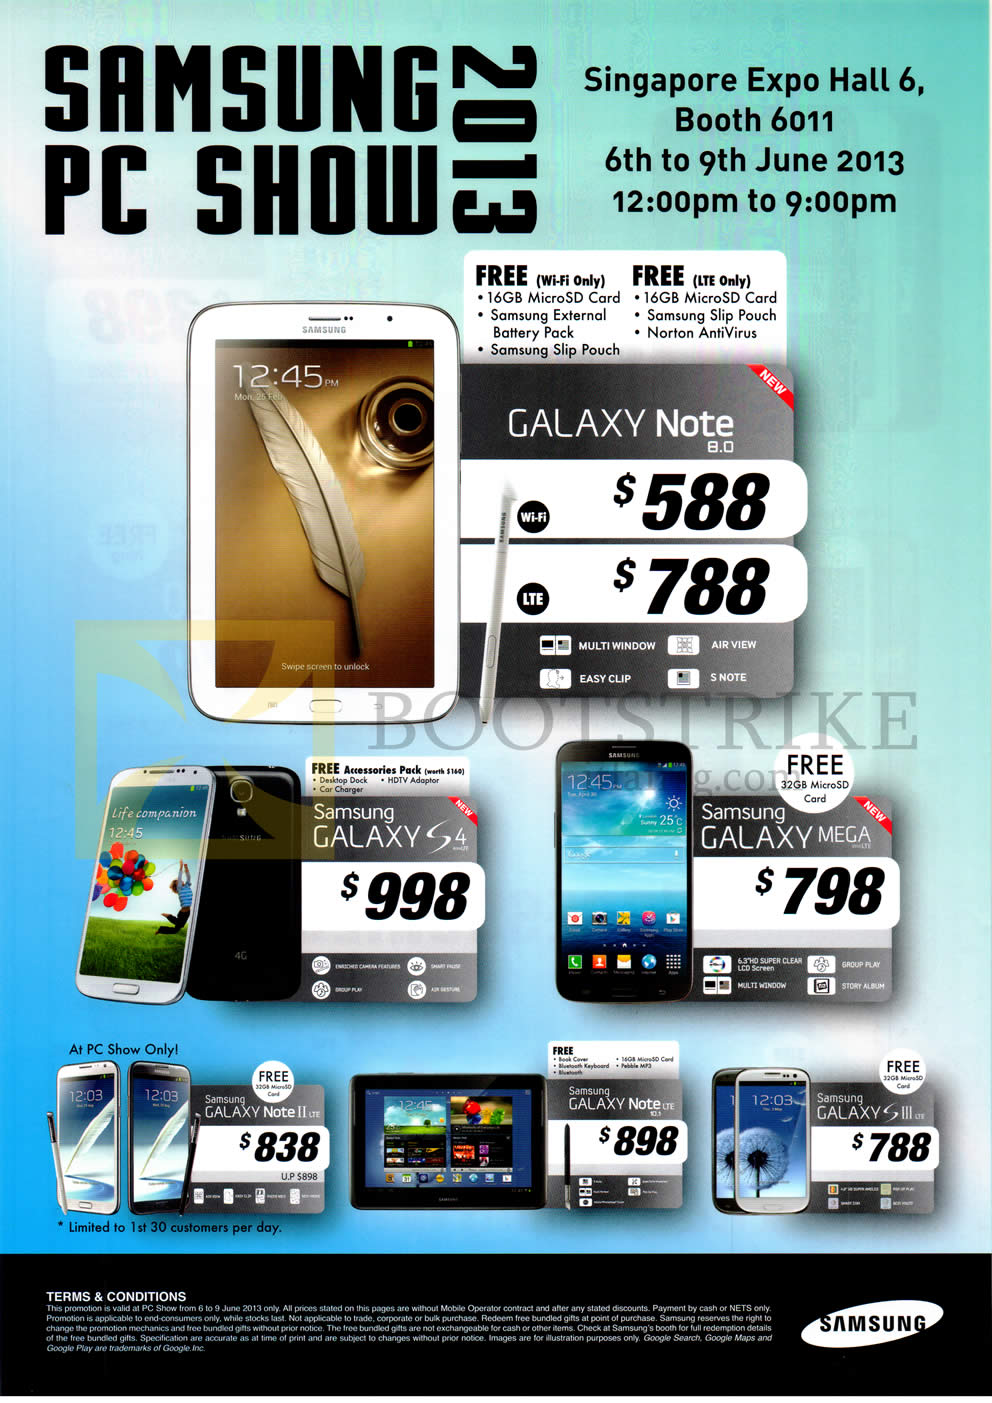 PC SHOW 2013 price list image brochure of Samsung Smartphones Galaxy Note 8.0, S4, Mega, Note II LTE, S III LTE